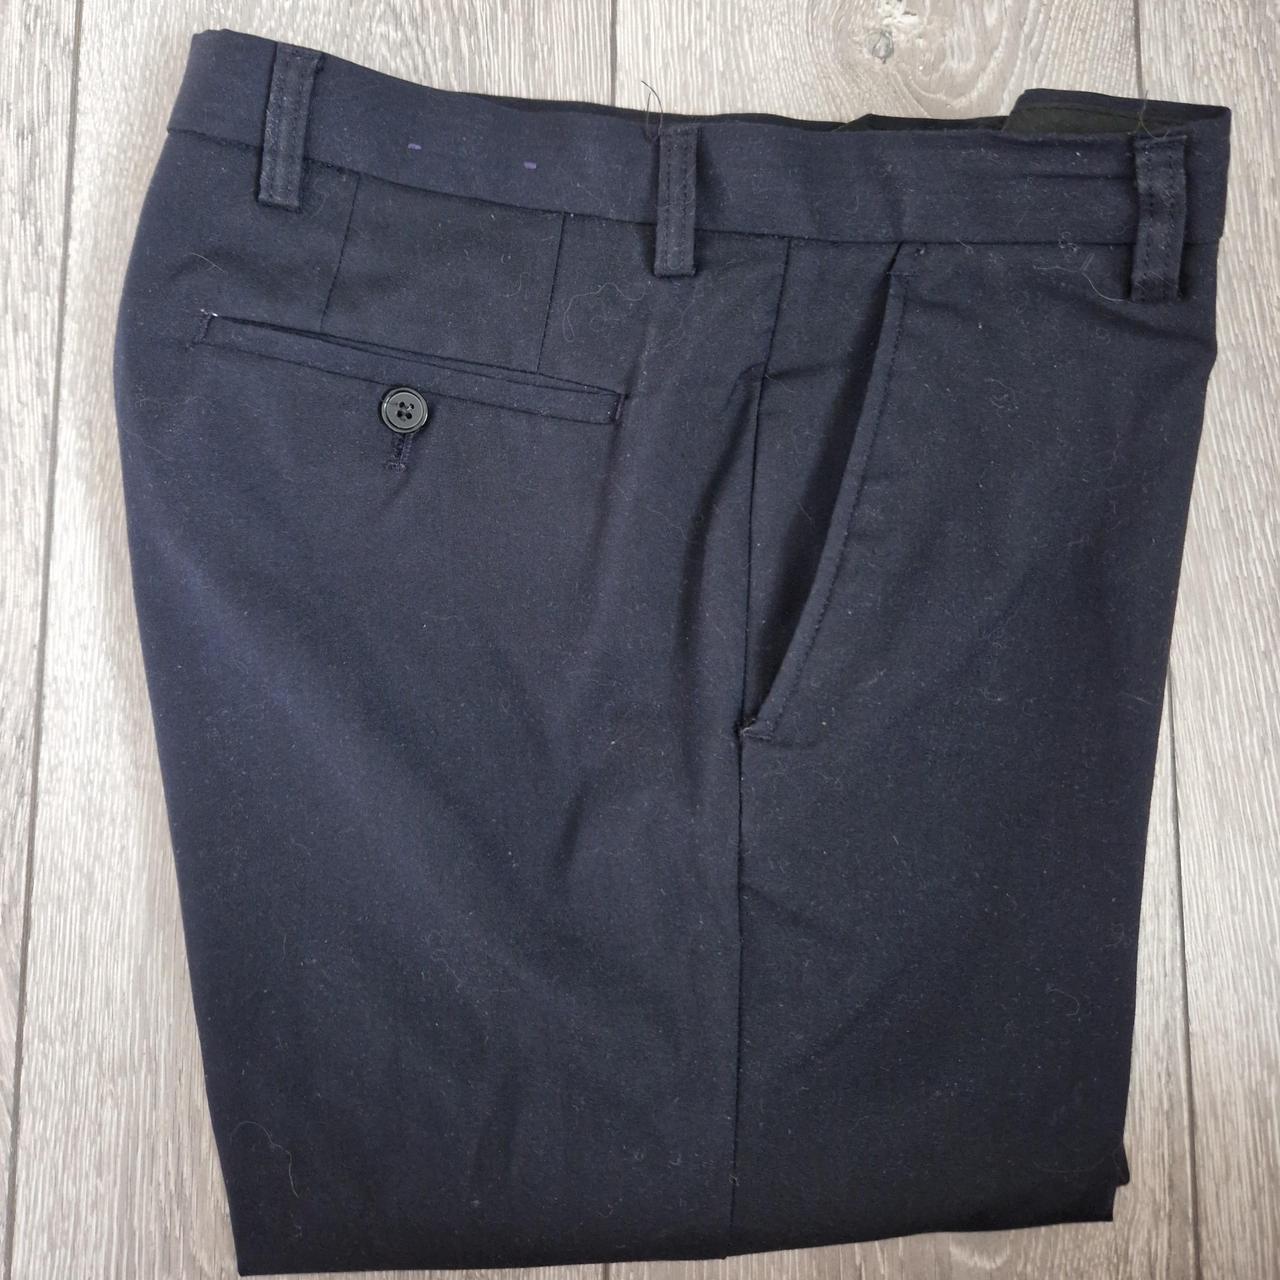 Next 32R slim fit suit trousers Good condition only... - Depop